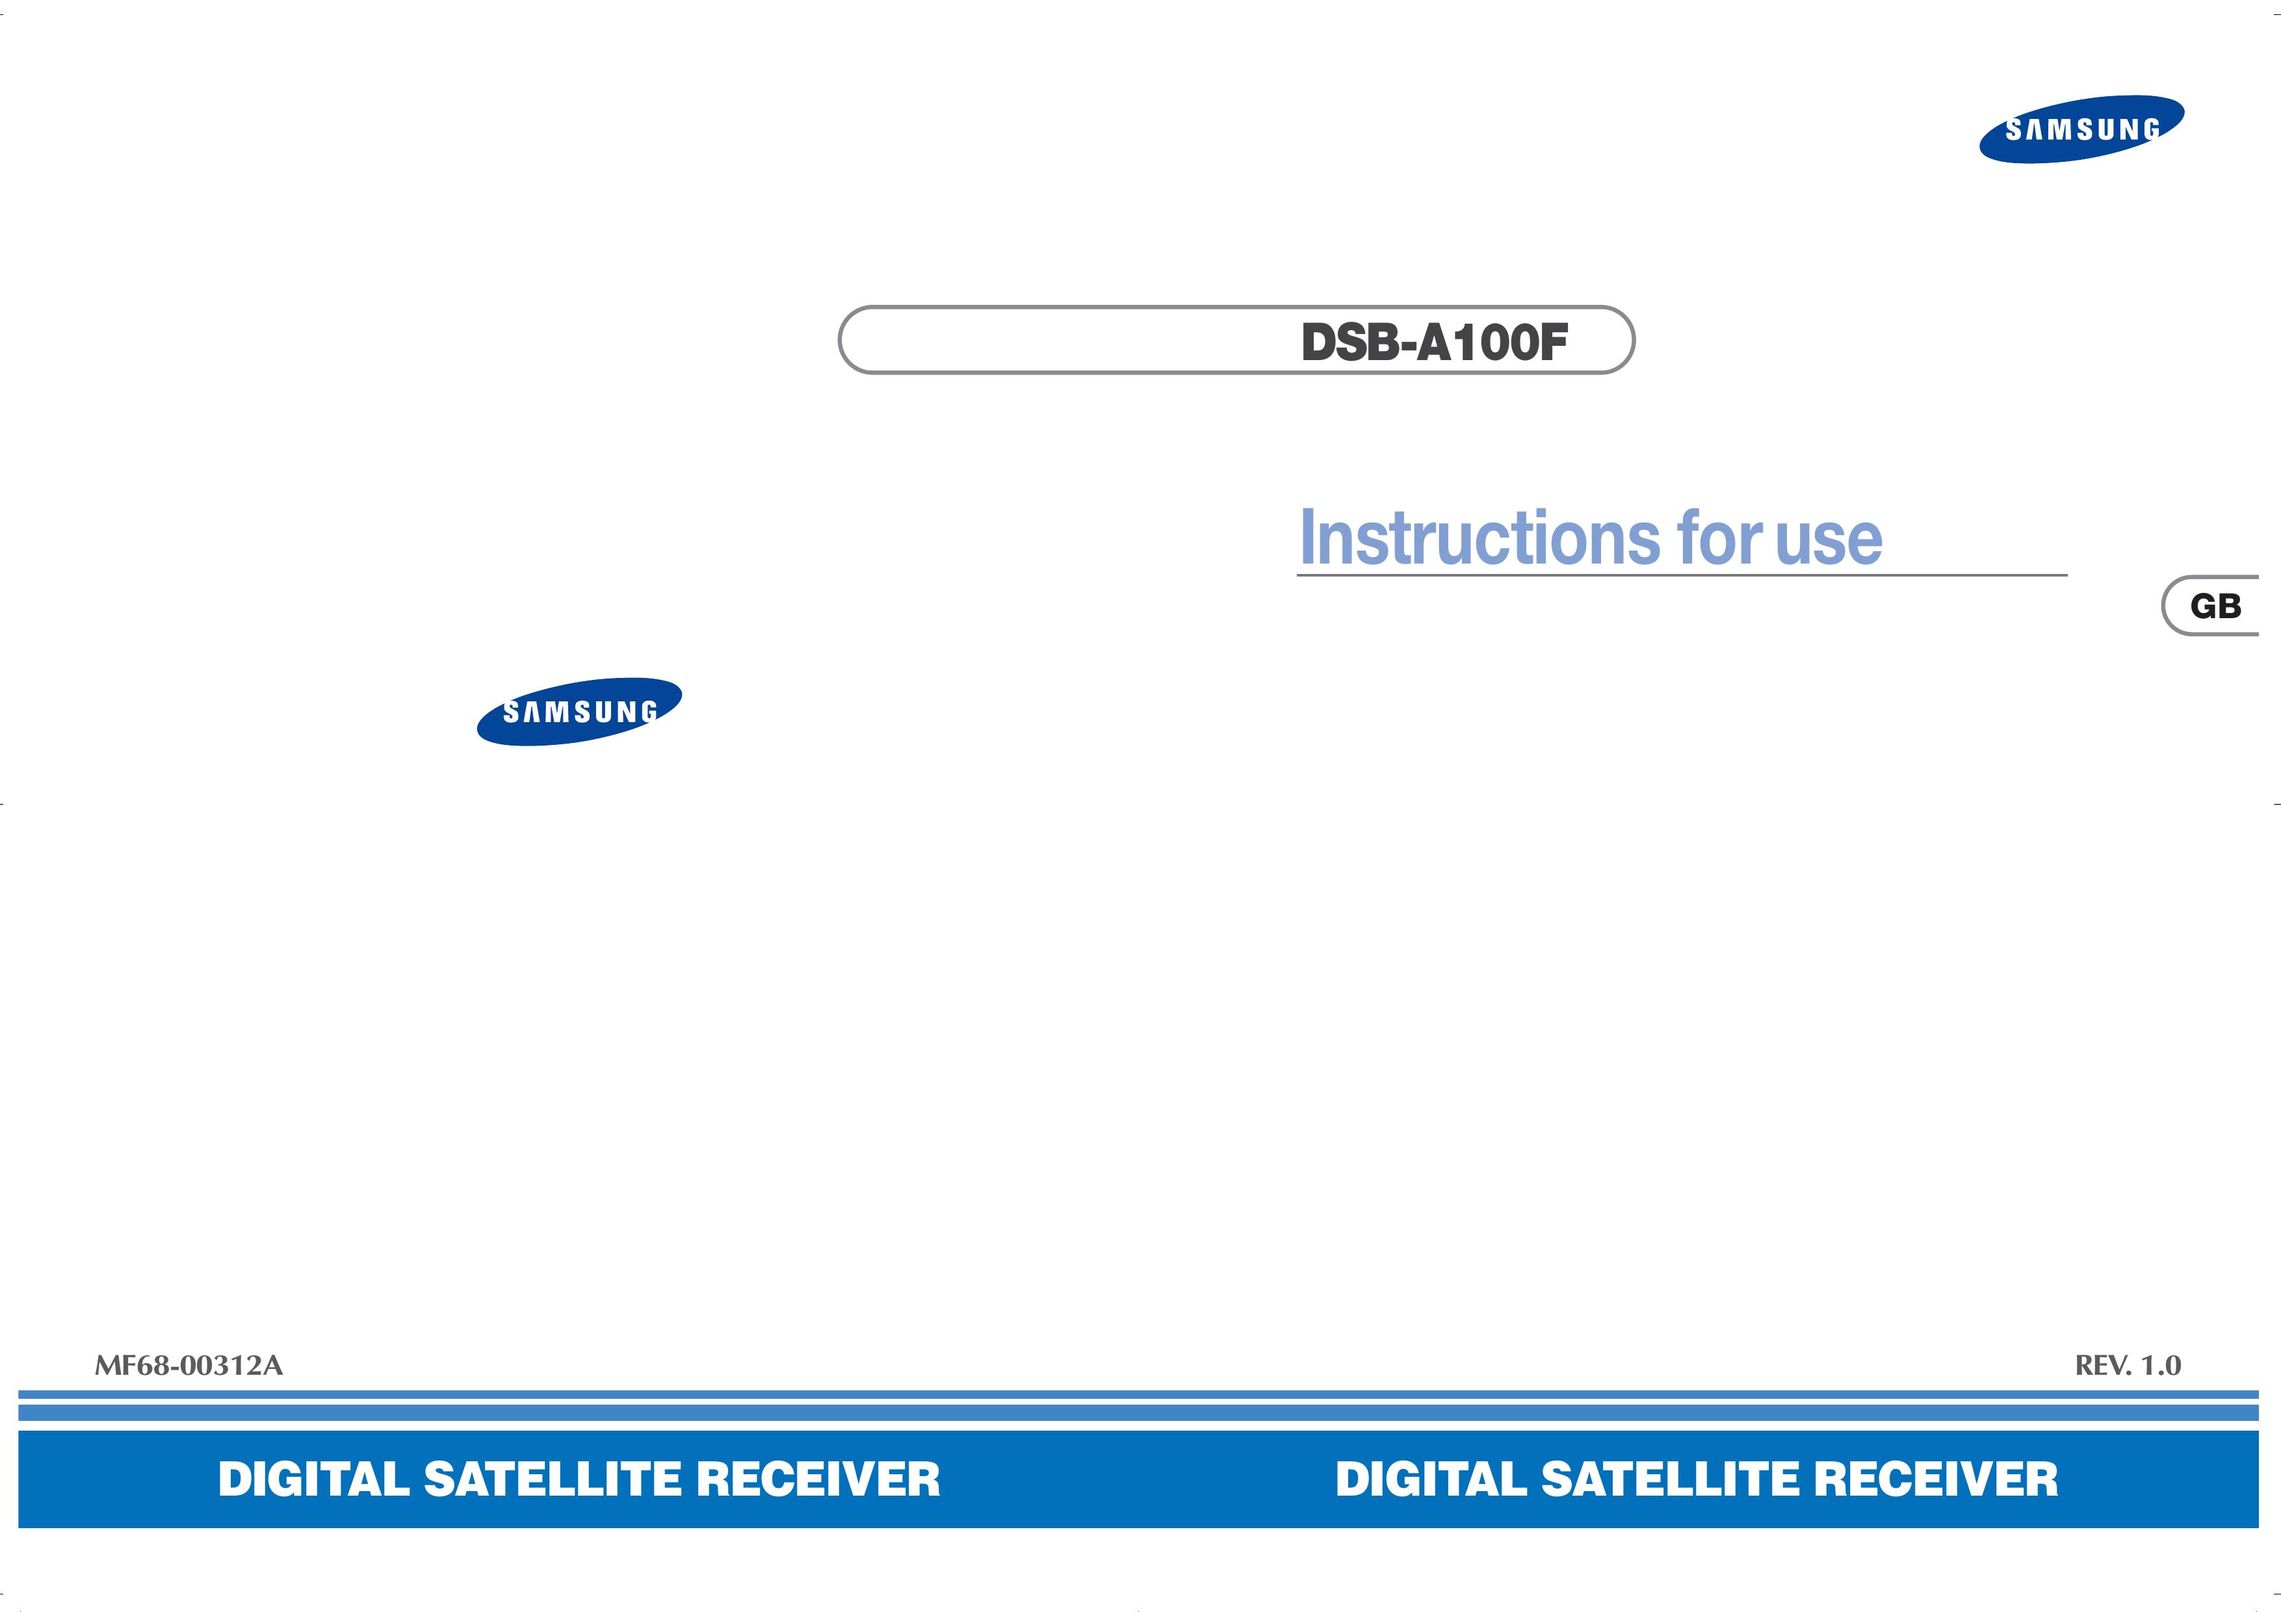 Samsung DSB-A100F Satellite TV System User Manual